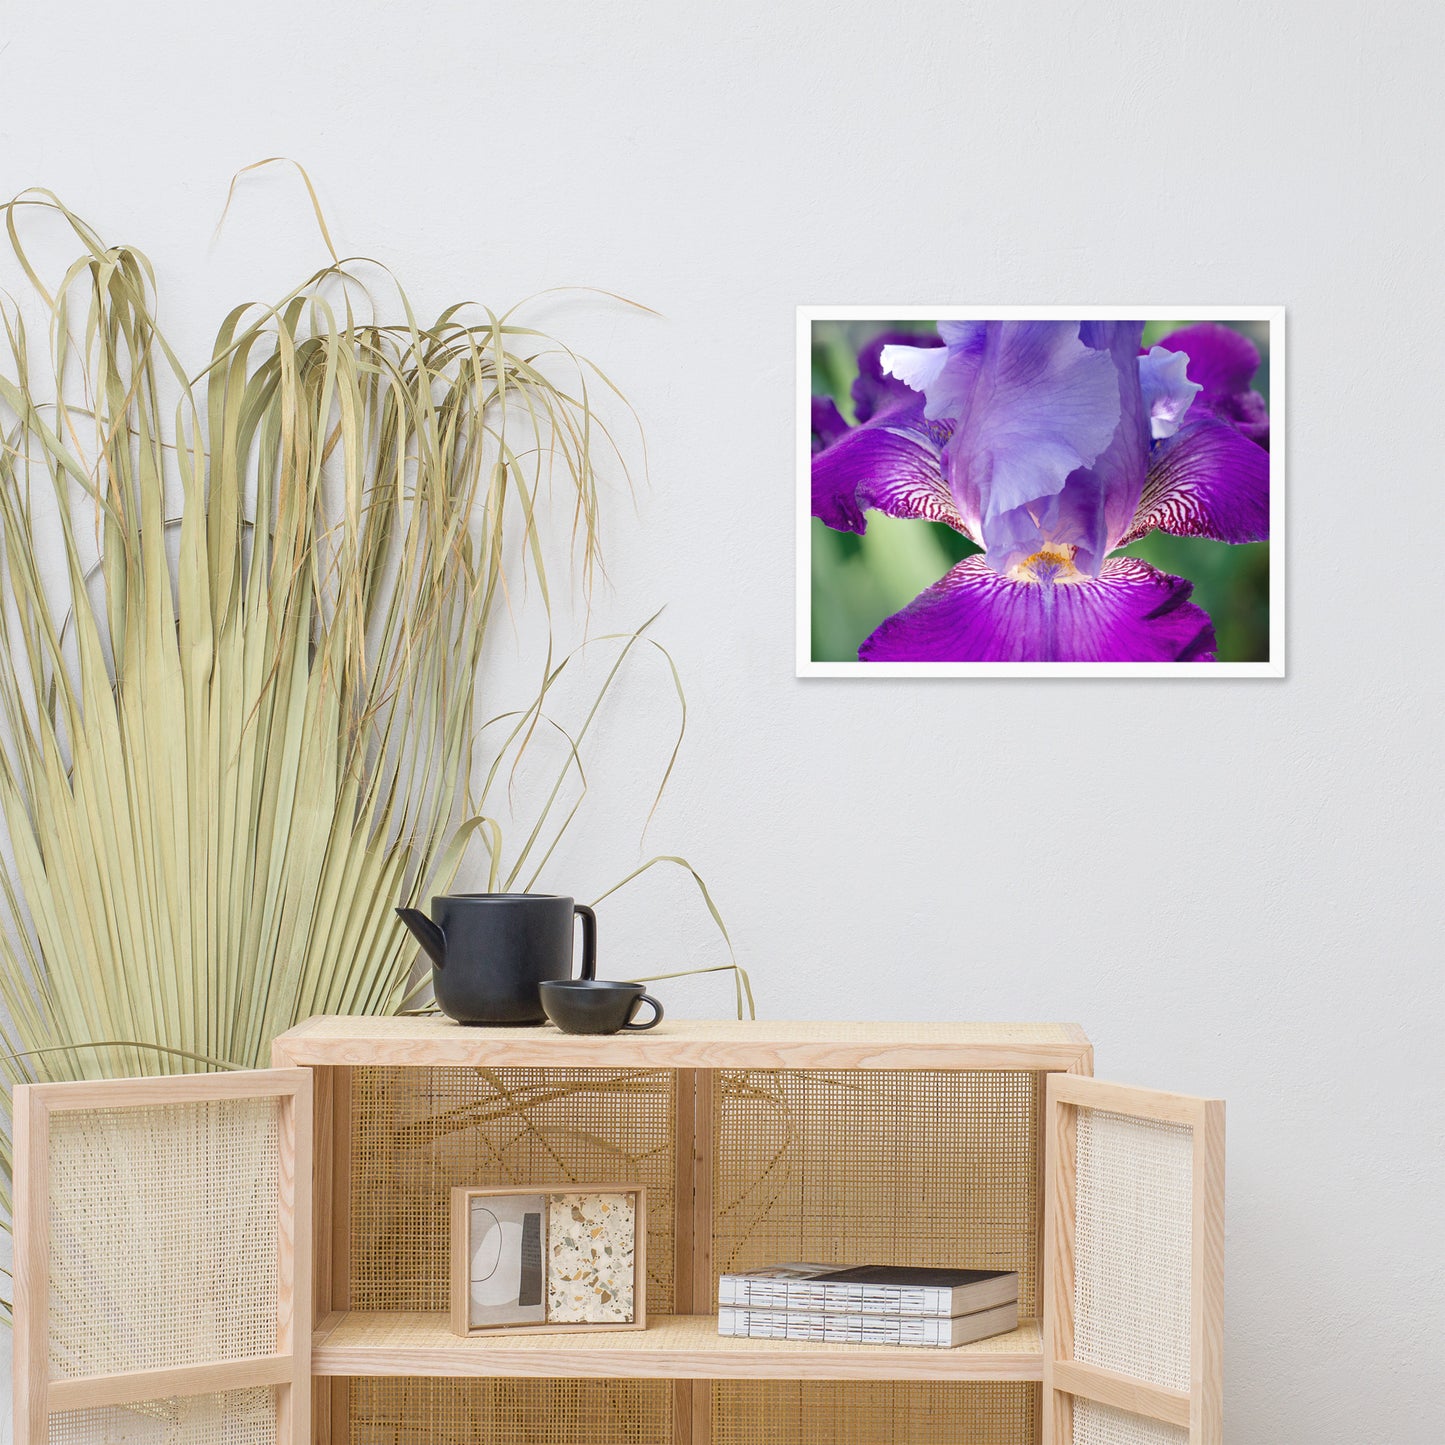 Etsy Bedroom Wall Prints: Glowing Iris - Floral / Botanical / Nature Photo Framed Wall Art Print - Artwork - Wall Decor - Modern Home Decor